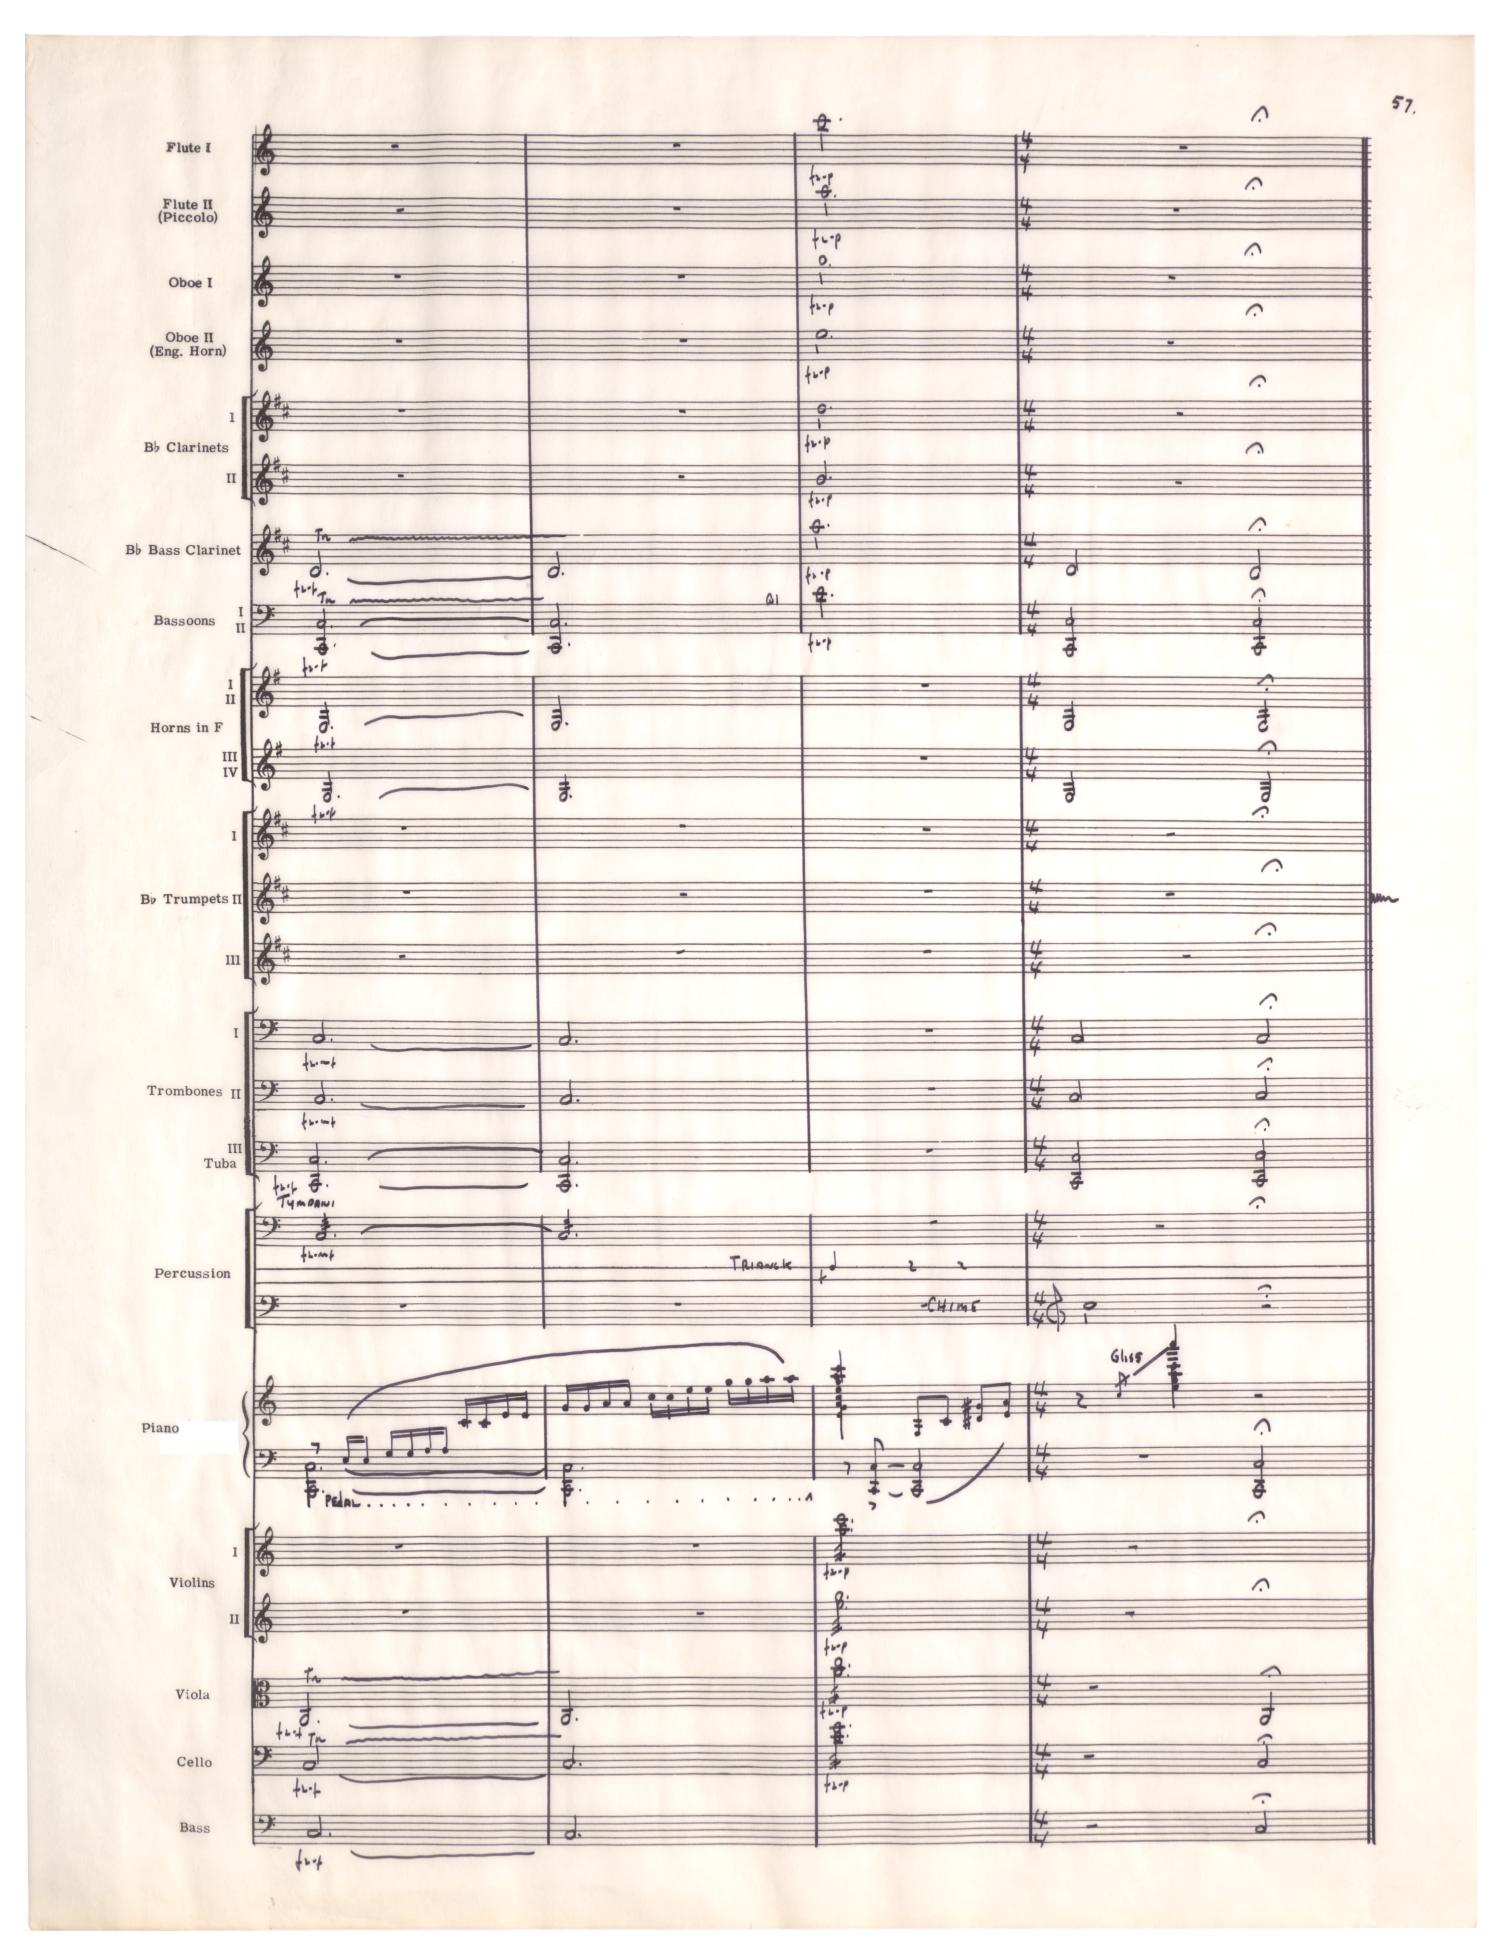 The encore concerto for piano and orchestra
                                                
                                                    57
                                                